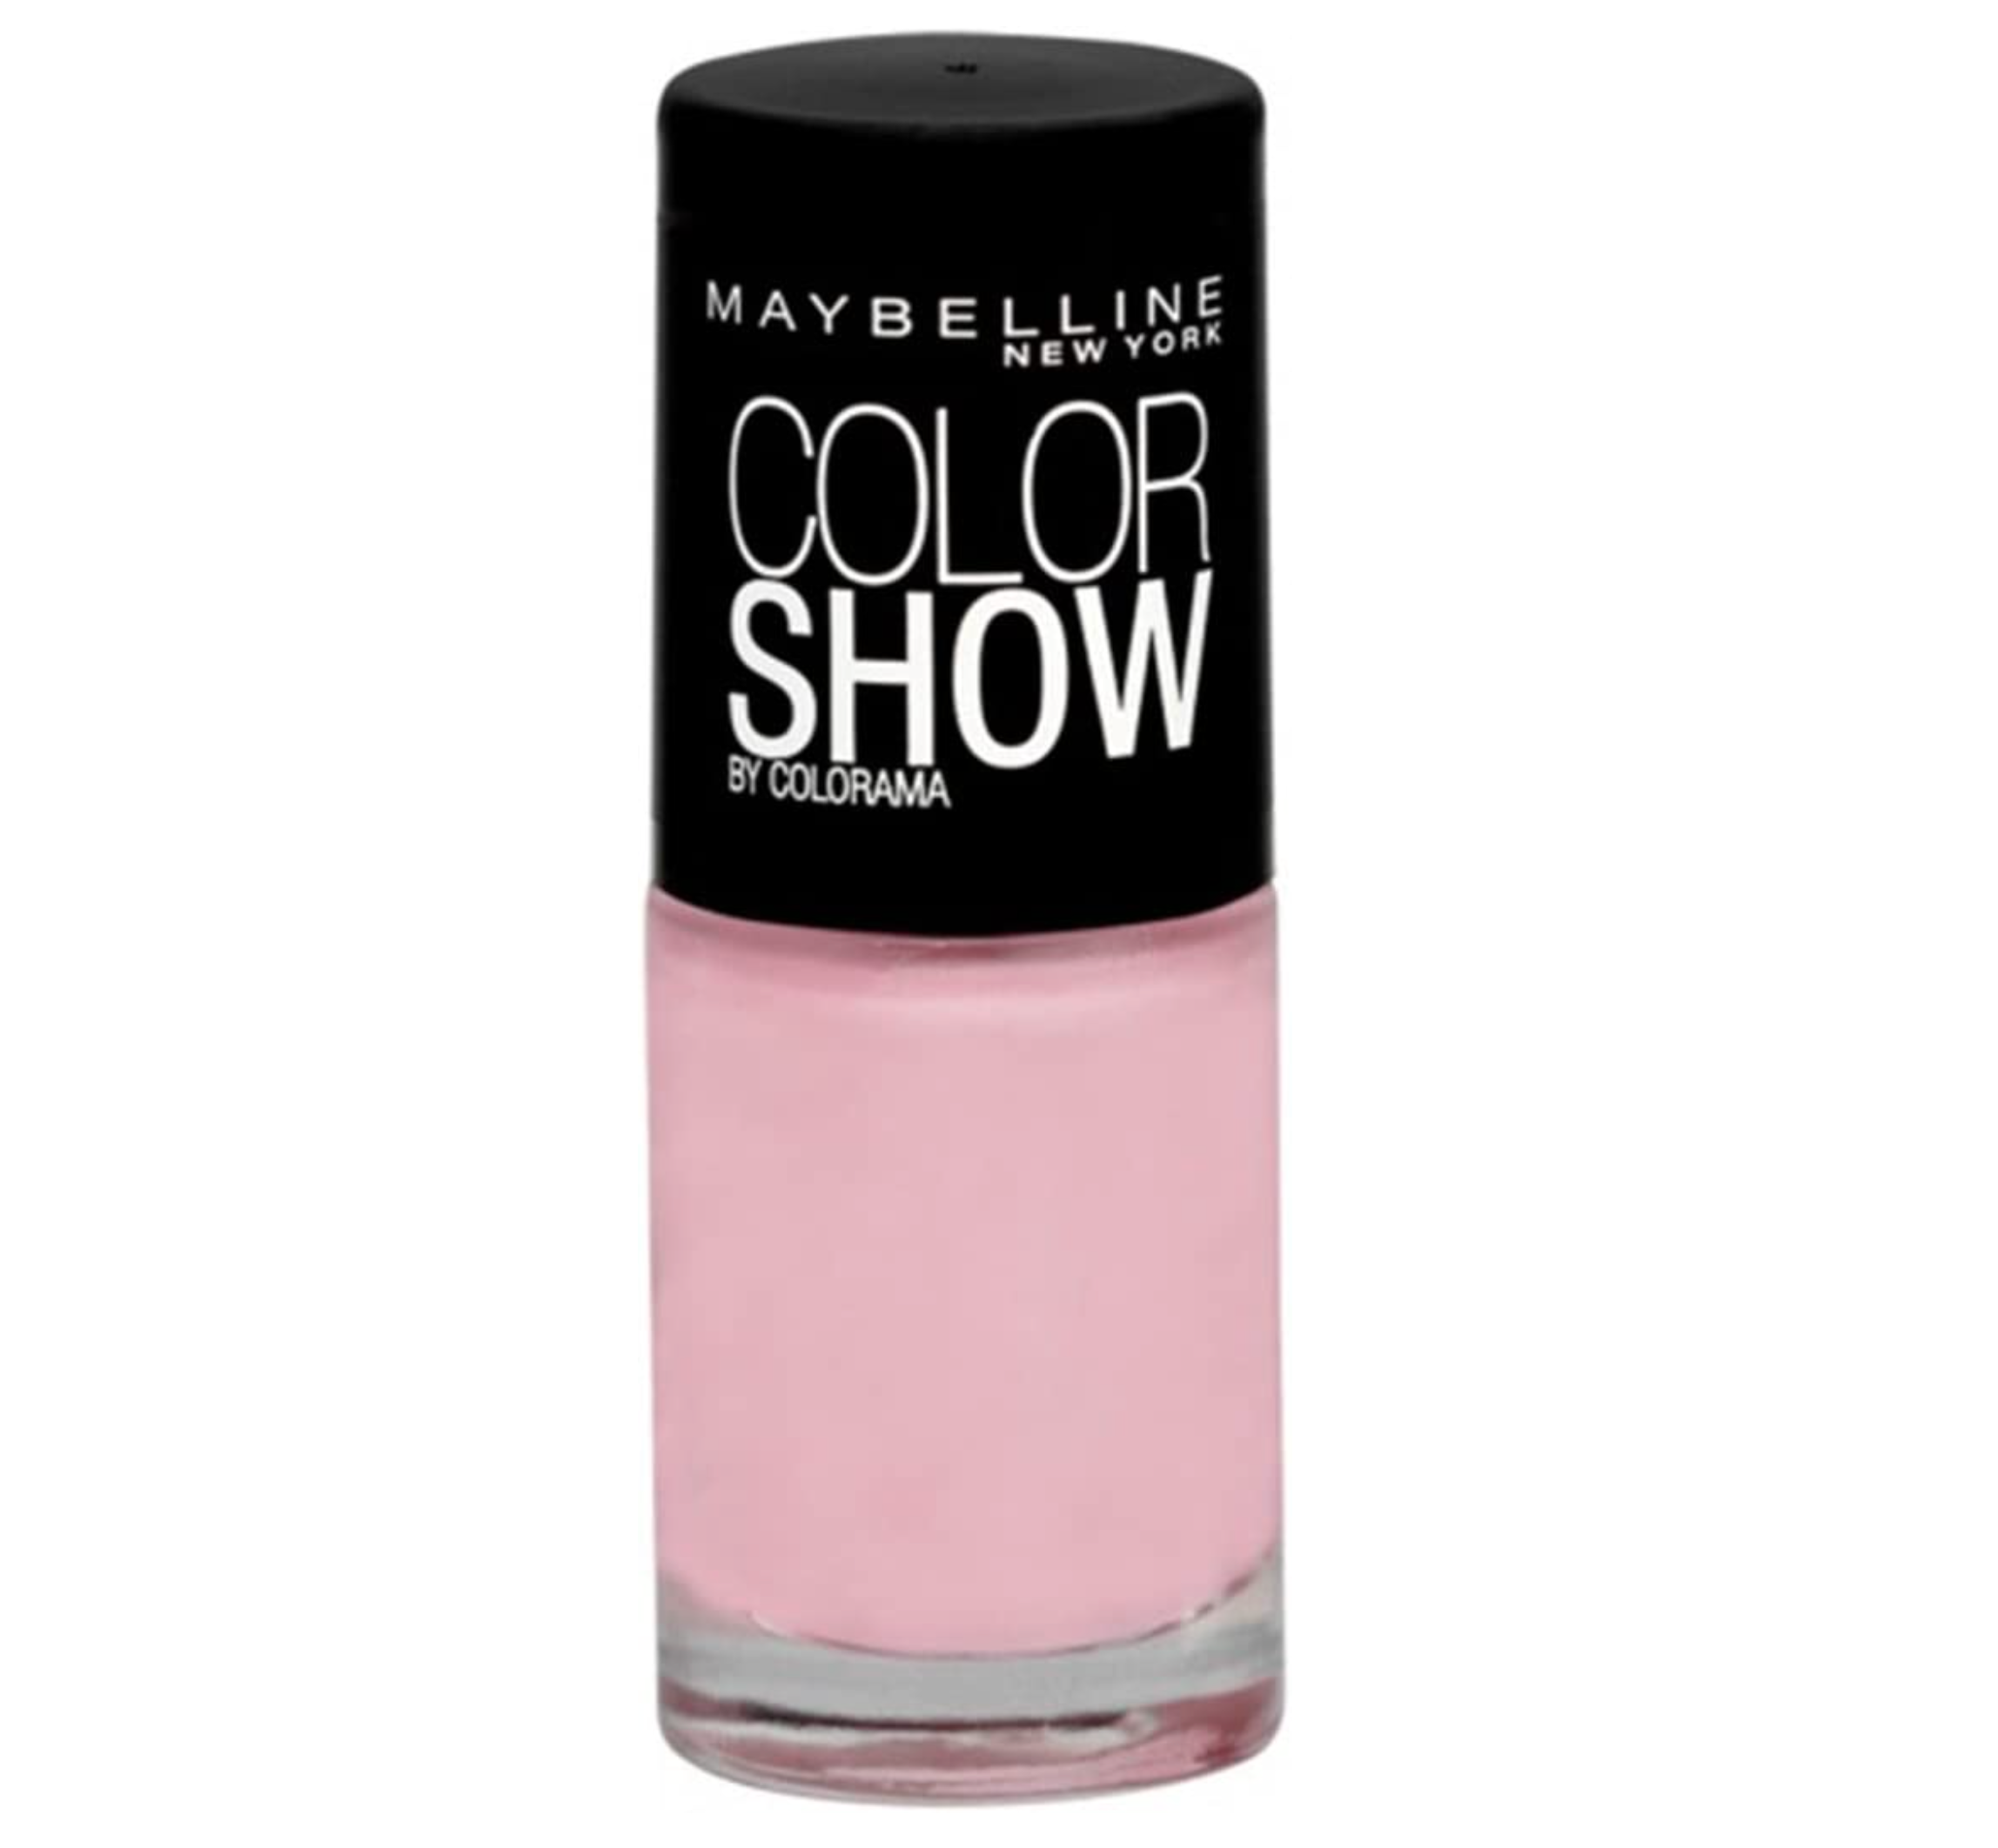 Maybelline Color Show Nail Polish - 77 Nebline